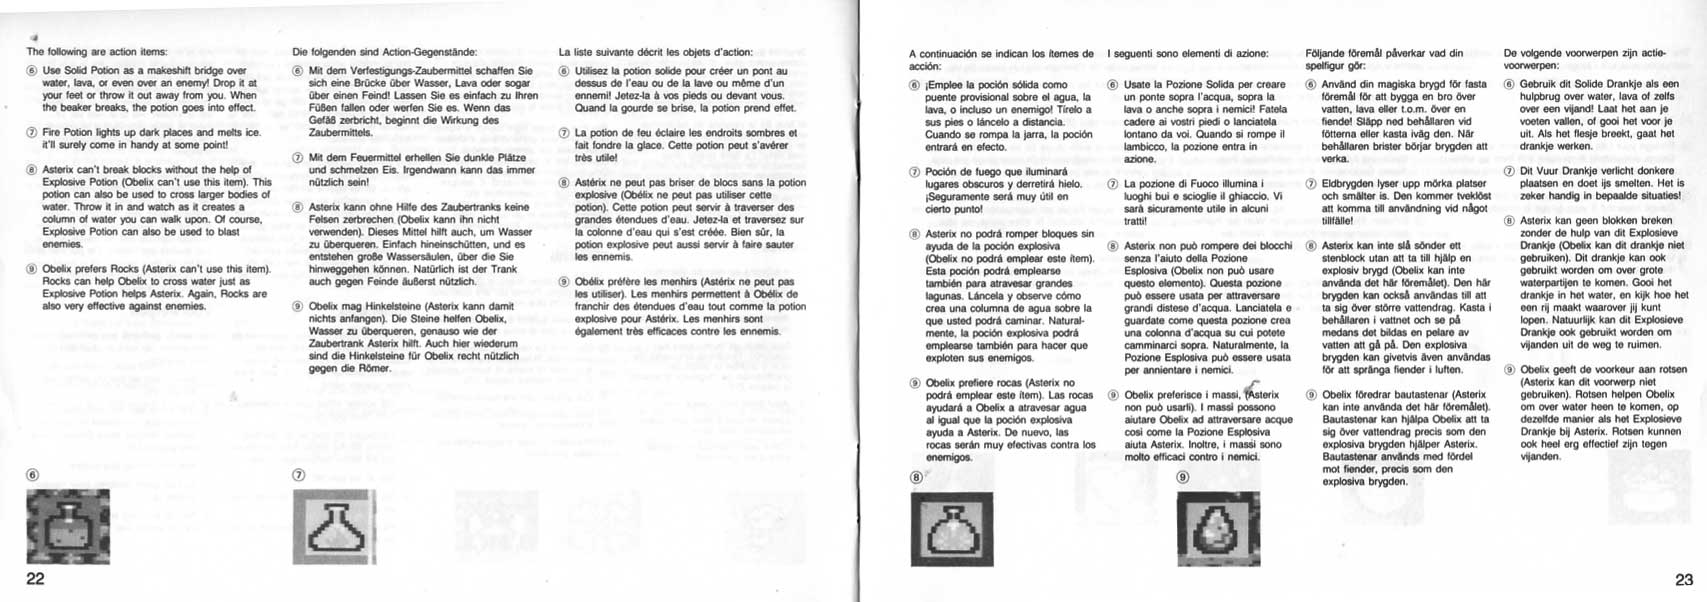 Astérix Jeux Master System Notice page 22-23